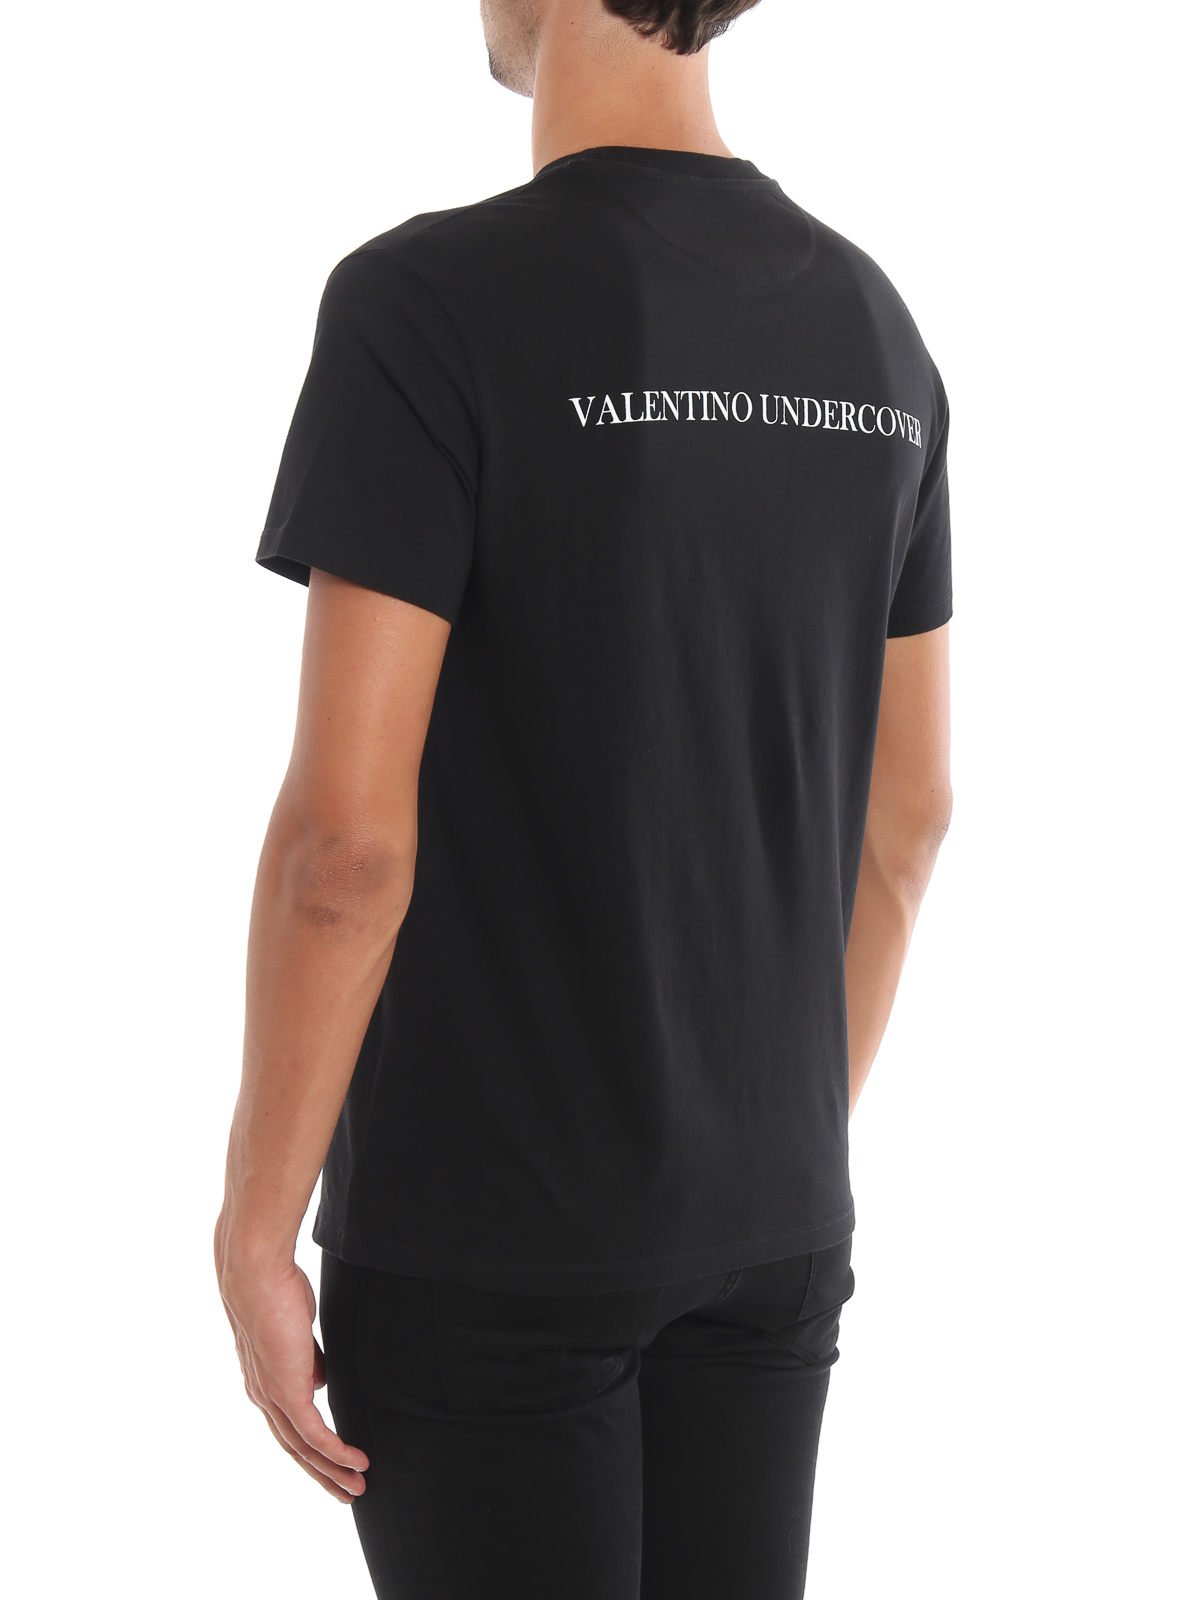 Tシャツ Valentino - Tシャツ - Valentino Undercover - SV0MG04A5RBAR9